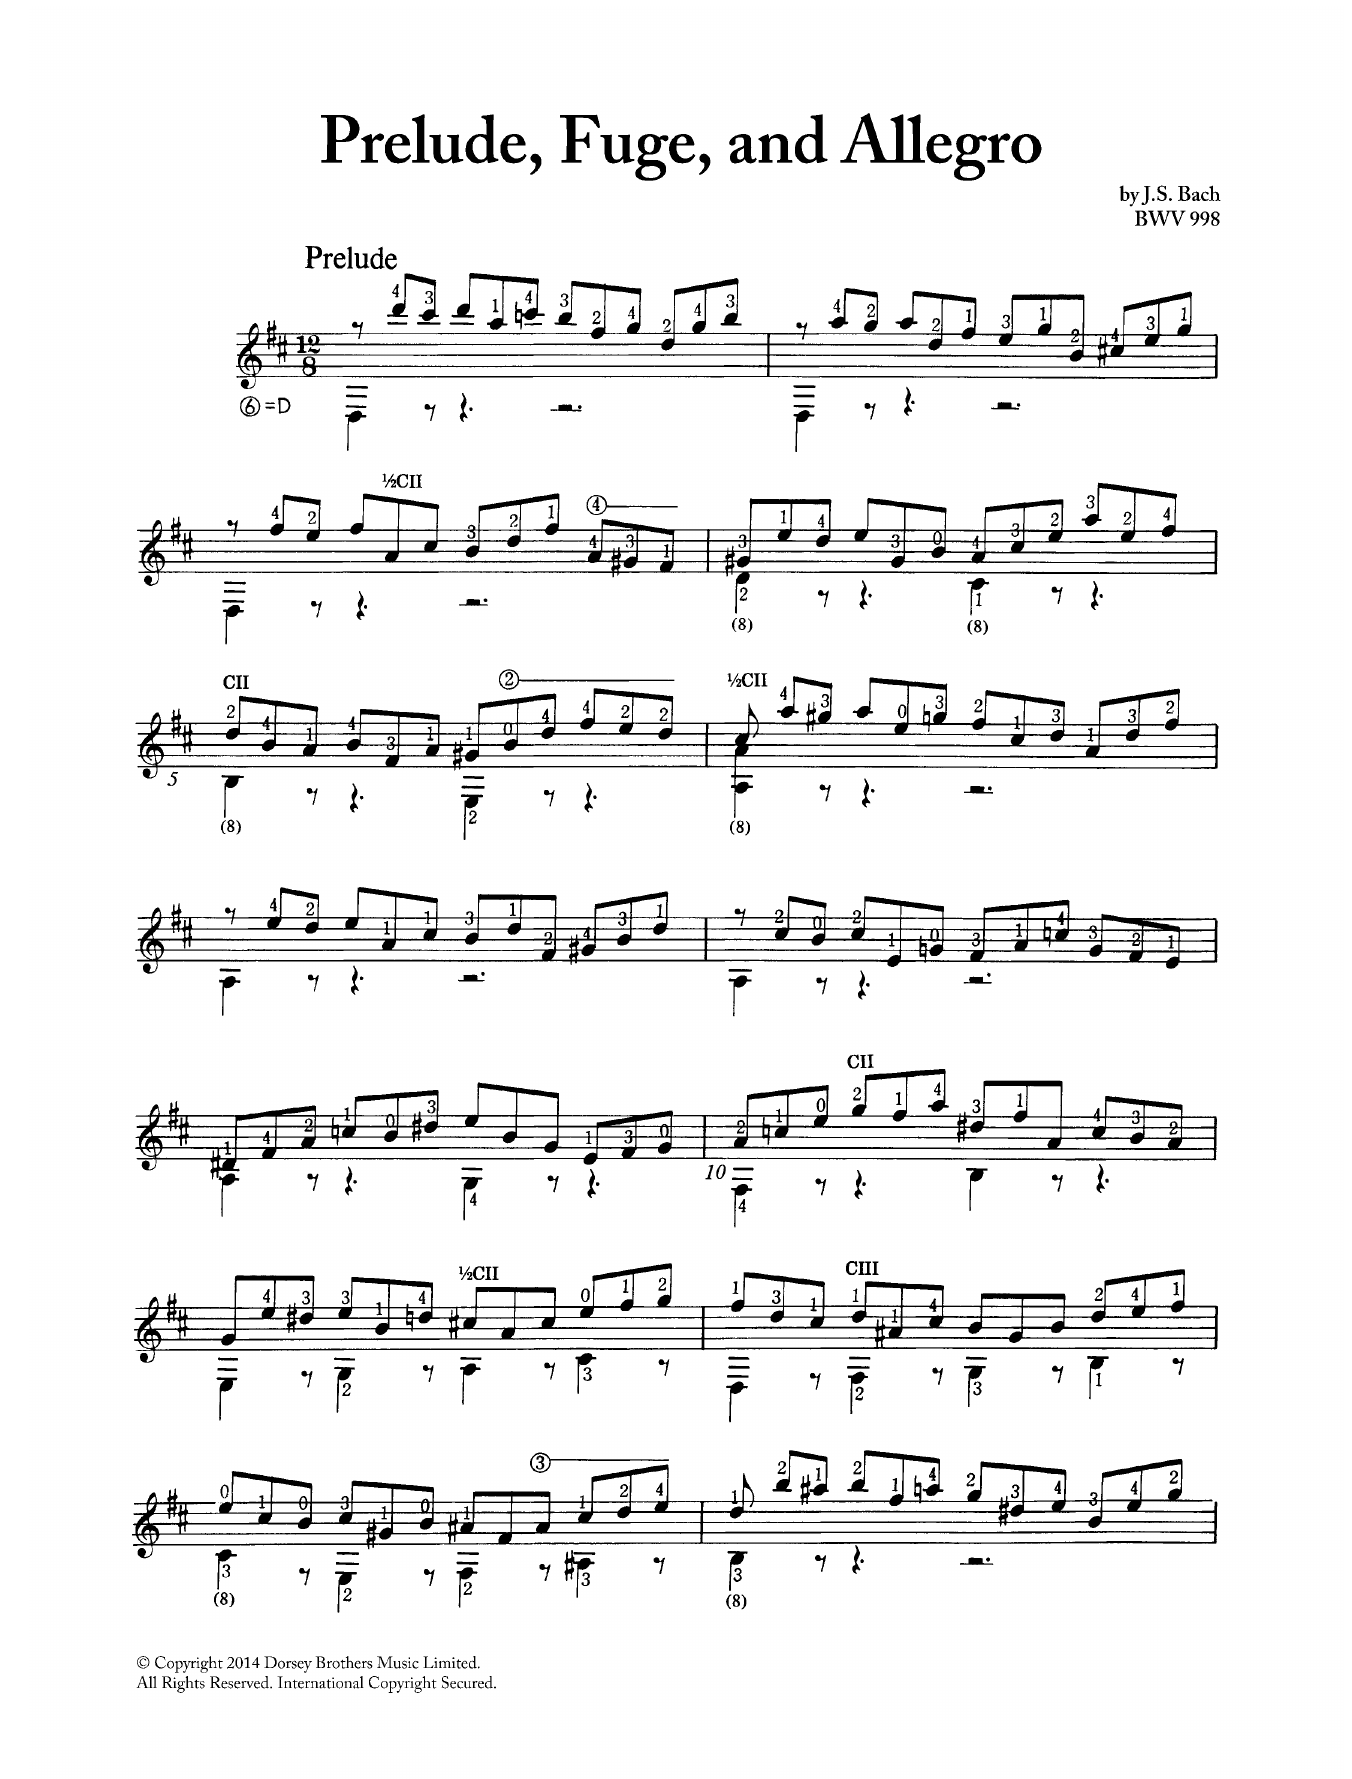 Johann Sebastian Bach Prelude, Fugue And Allegro BWV 998 Sheet Music Notes & Chords for Guitar - Download or Print PDF